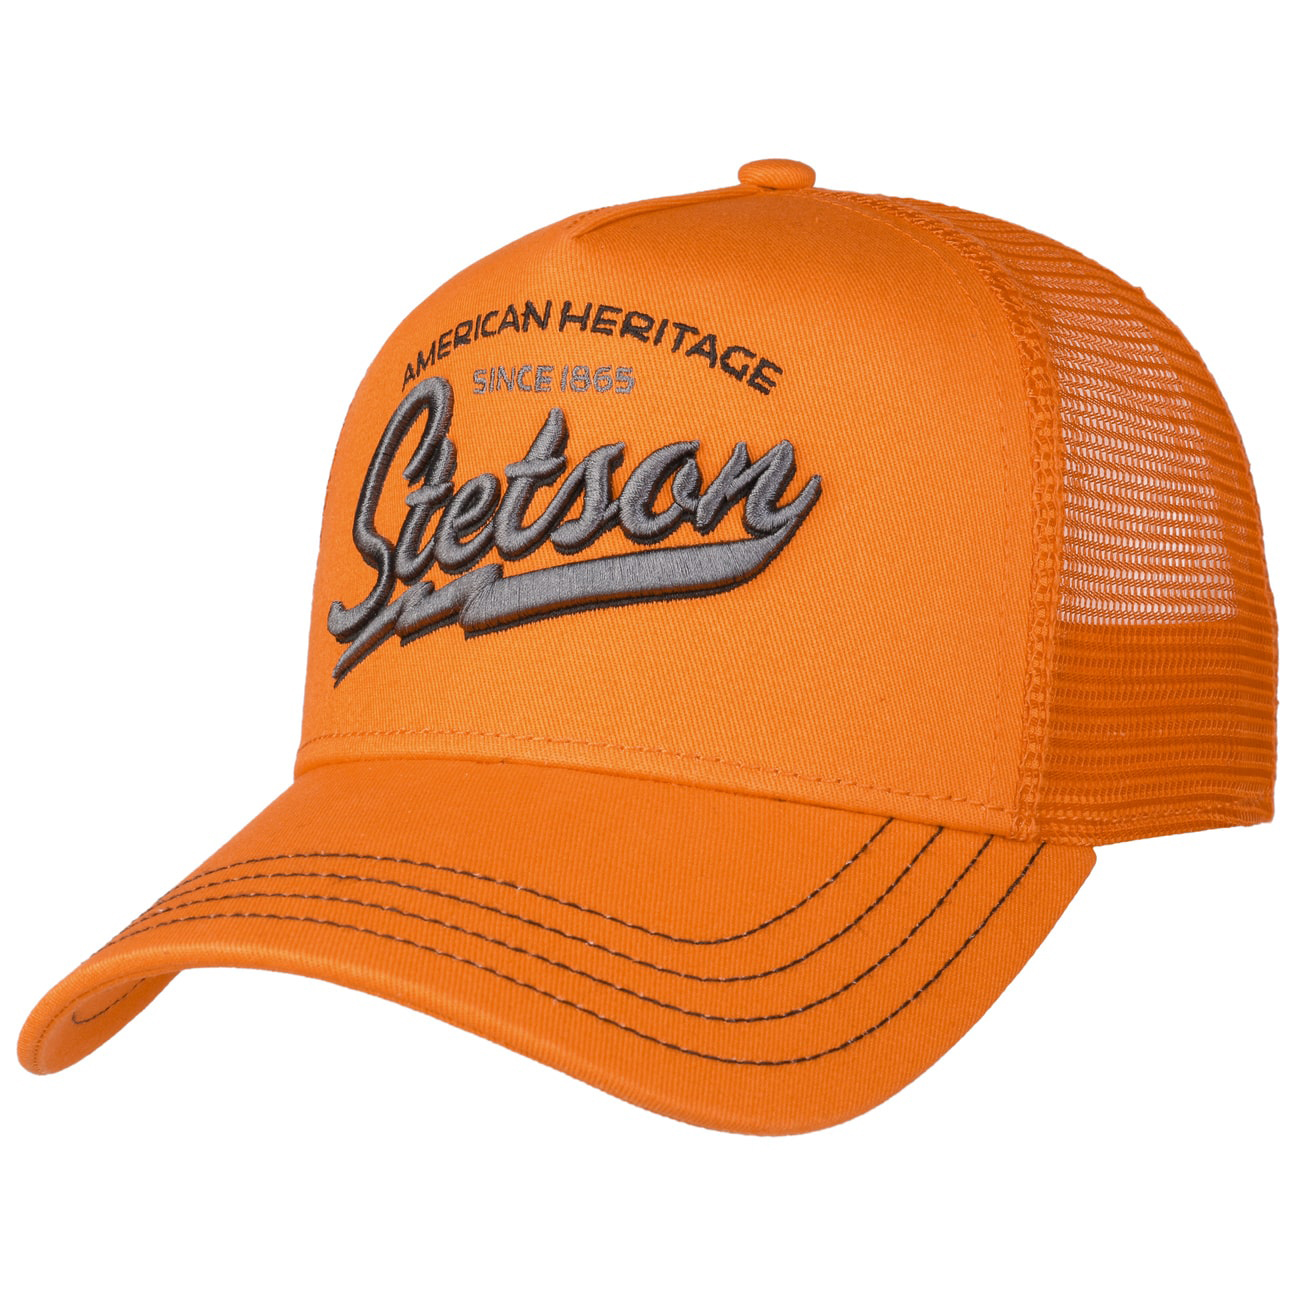 Stetson - Since 1865 Trucker Cap - Flame Orange